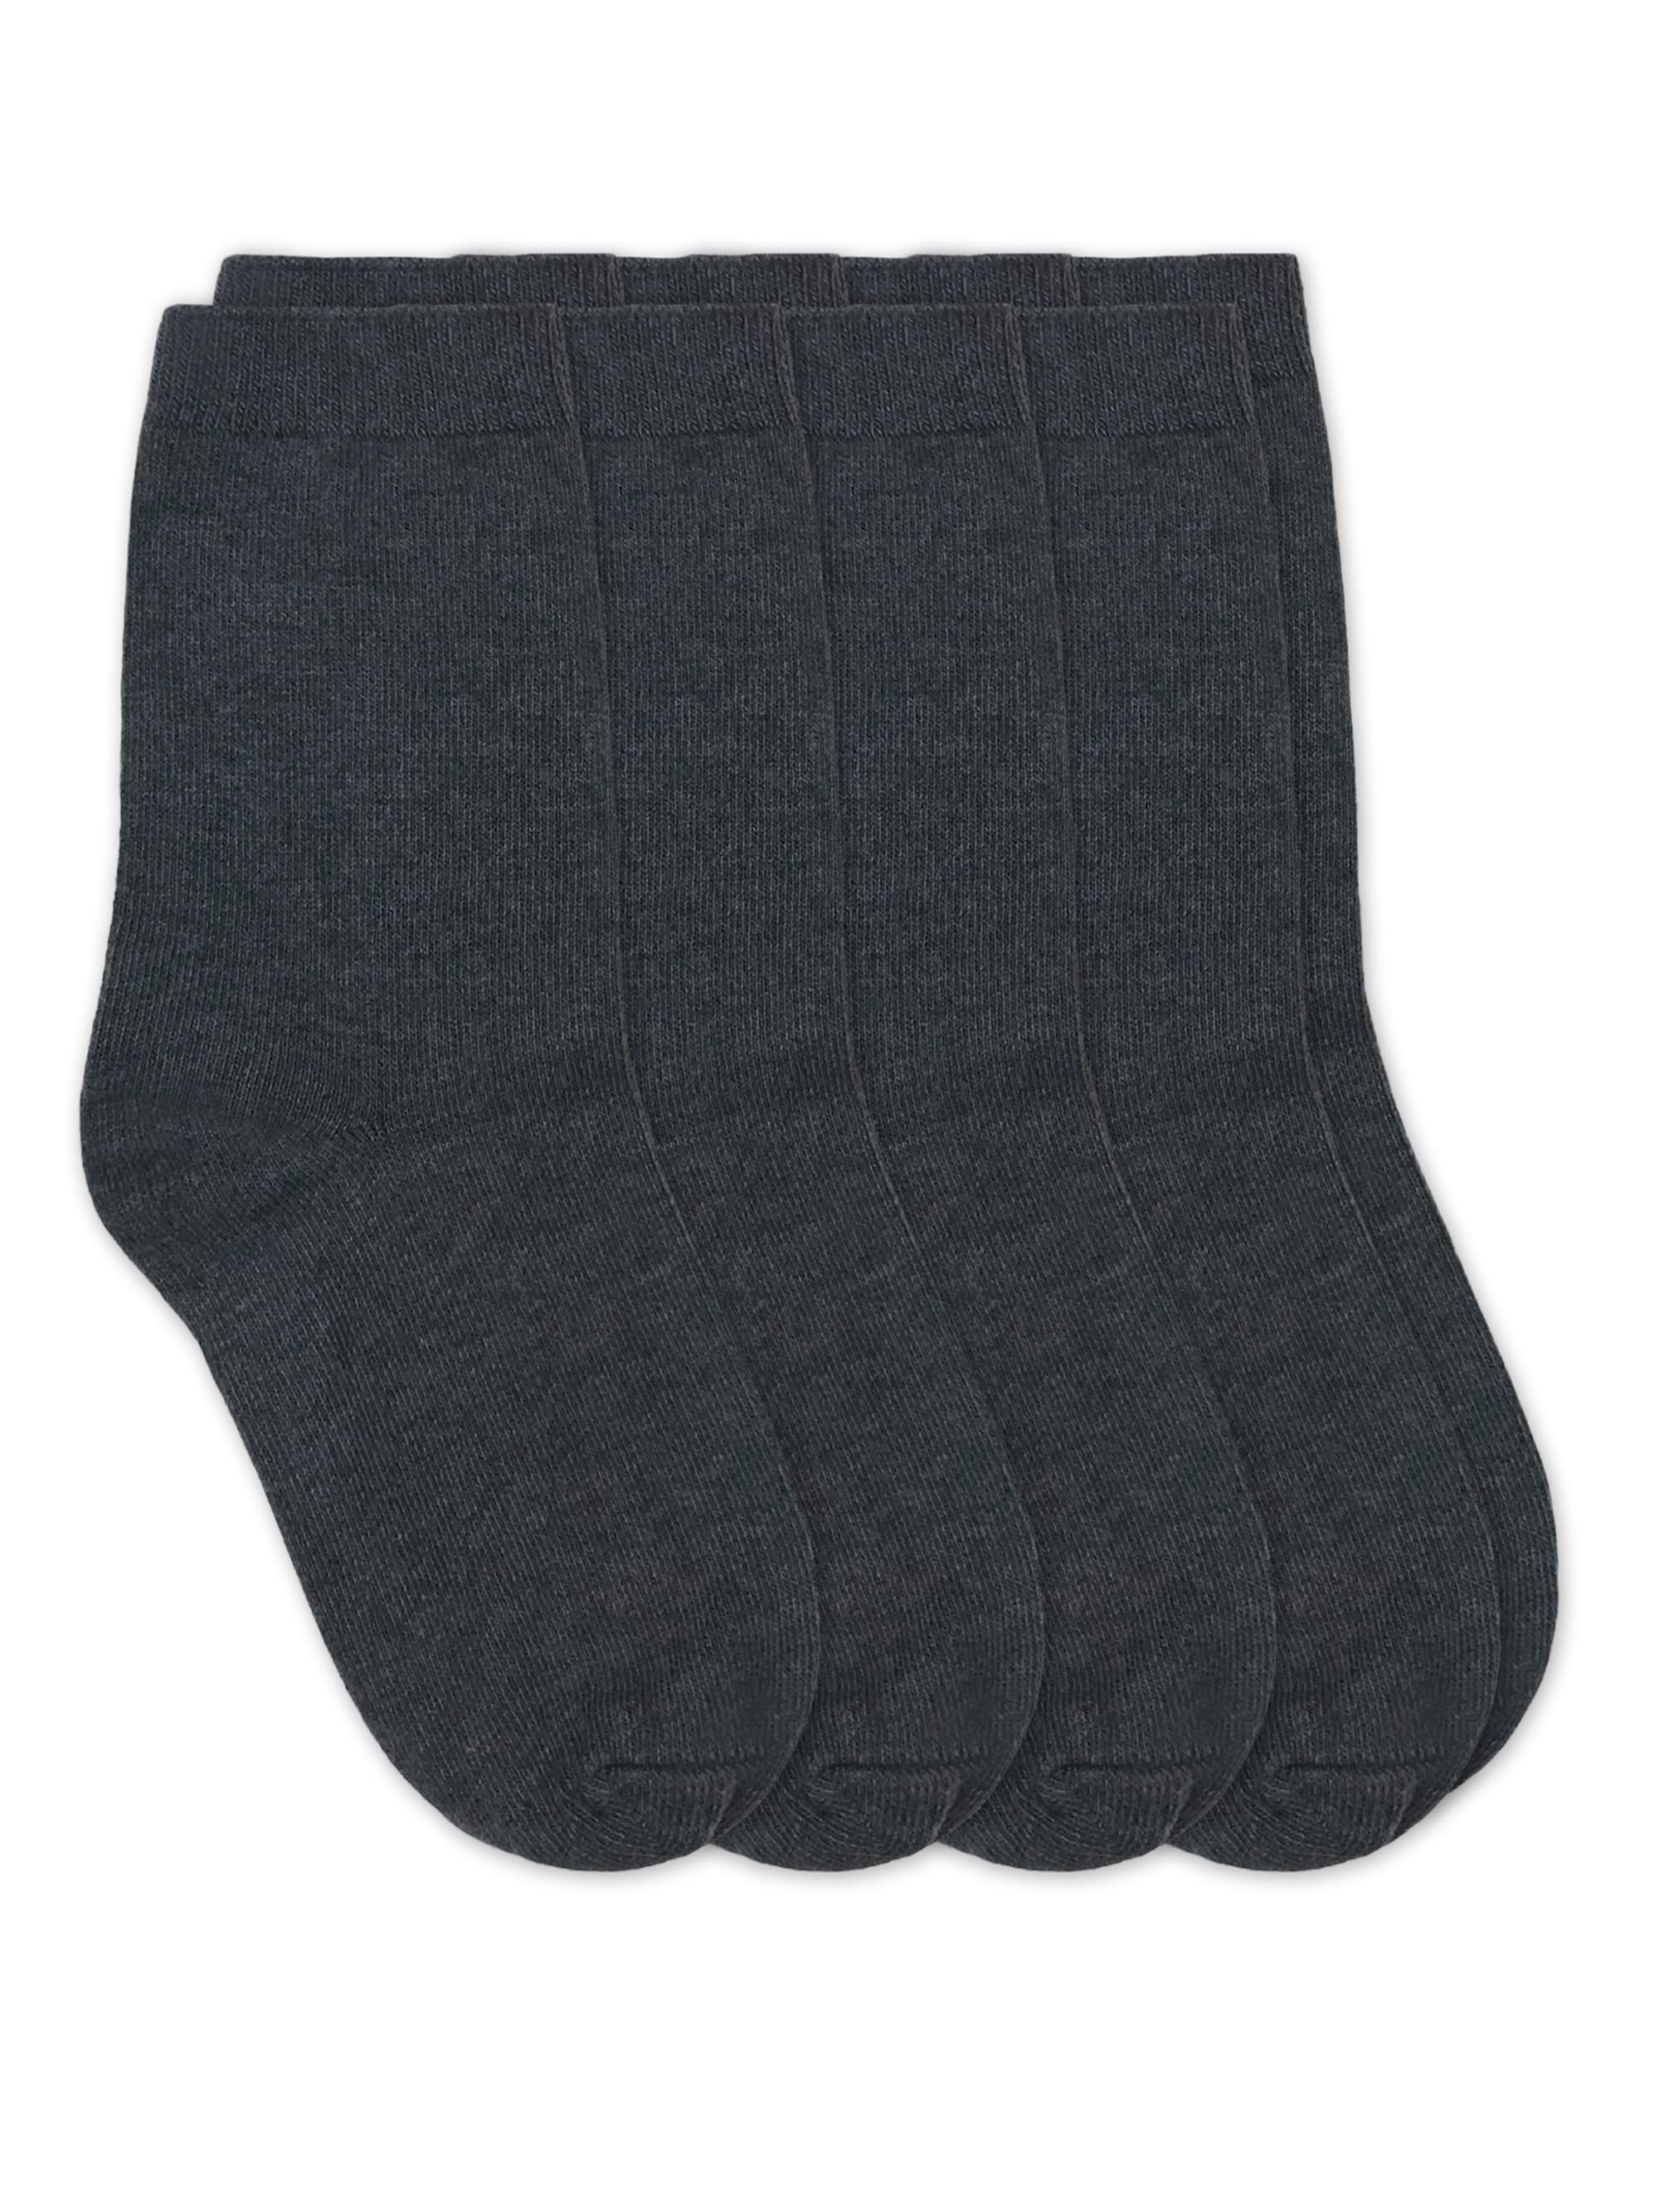 Jefferies Socks Boys Socks, 4 Pairs School Uniform Cotton Premium Crew Socks (Little Boys & Big Boys) - image 1 of 2